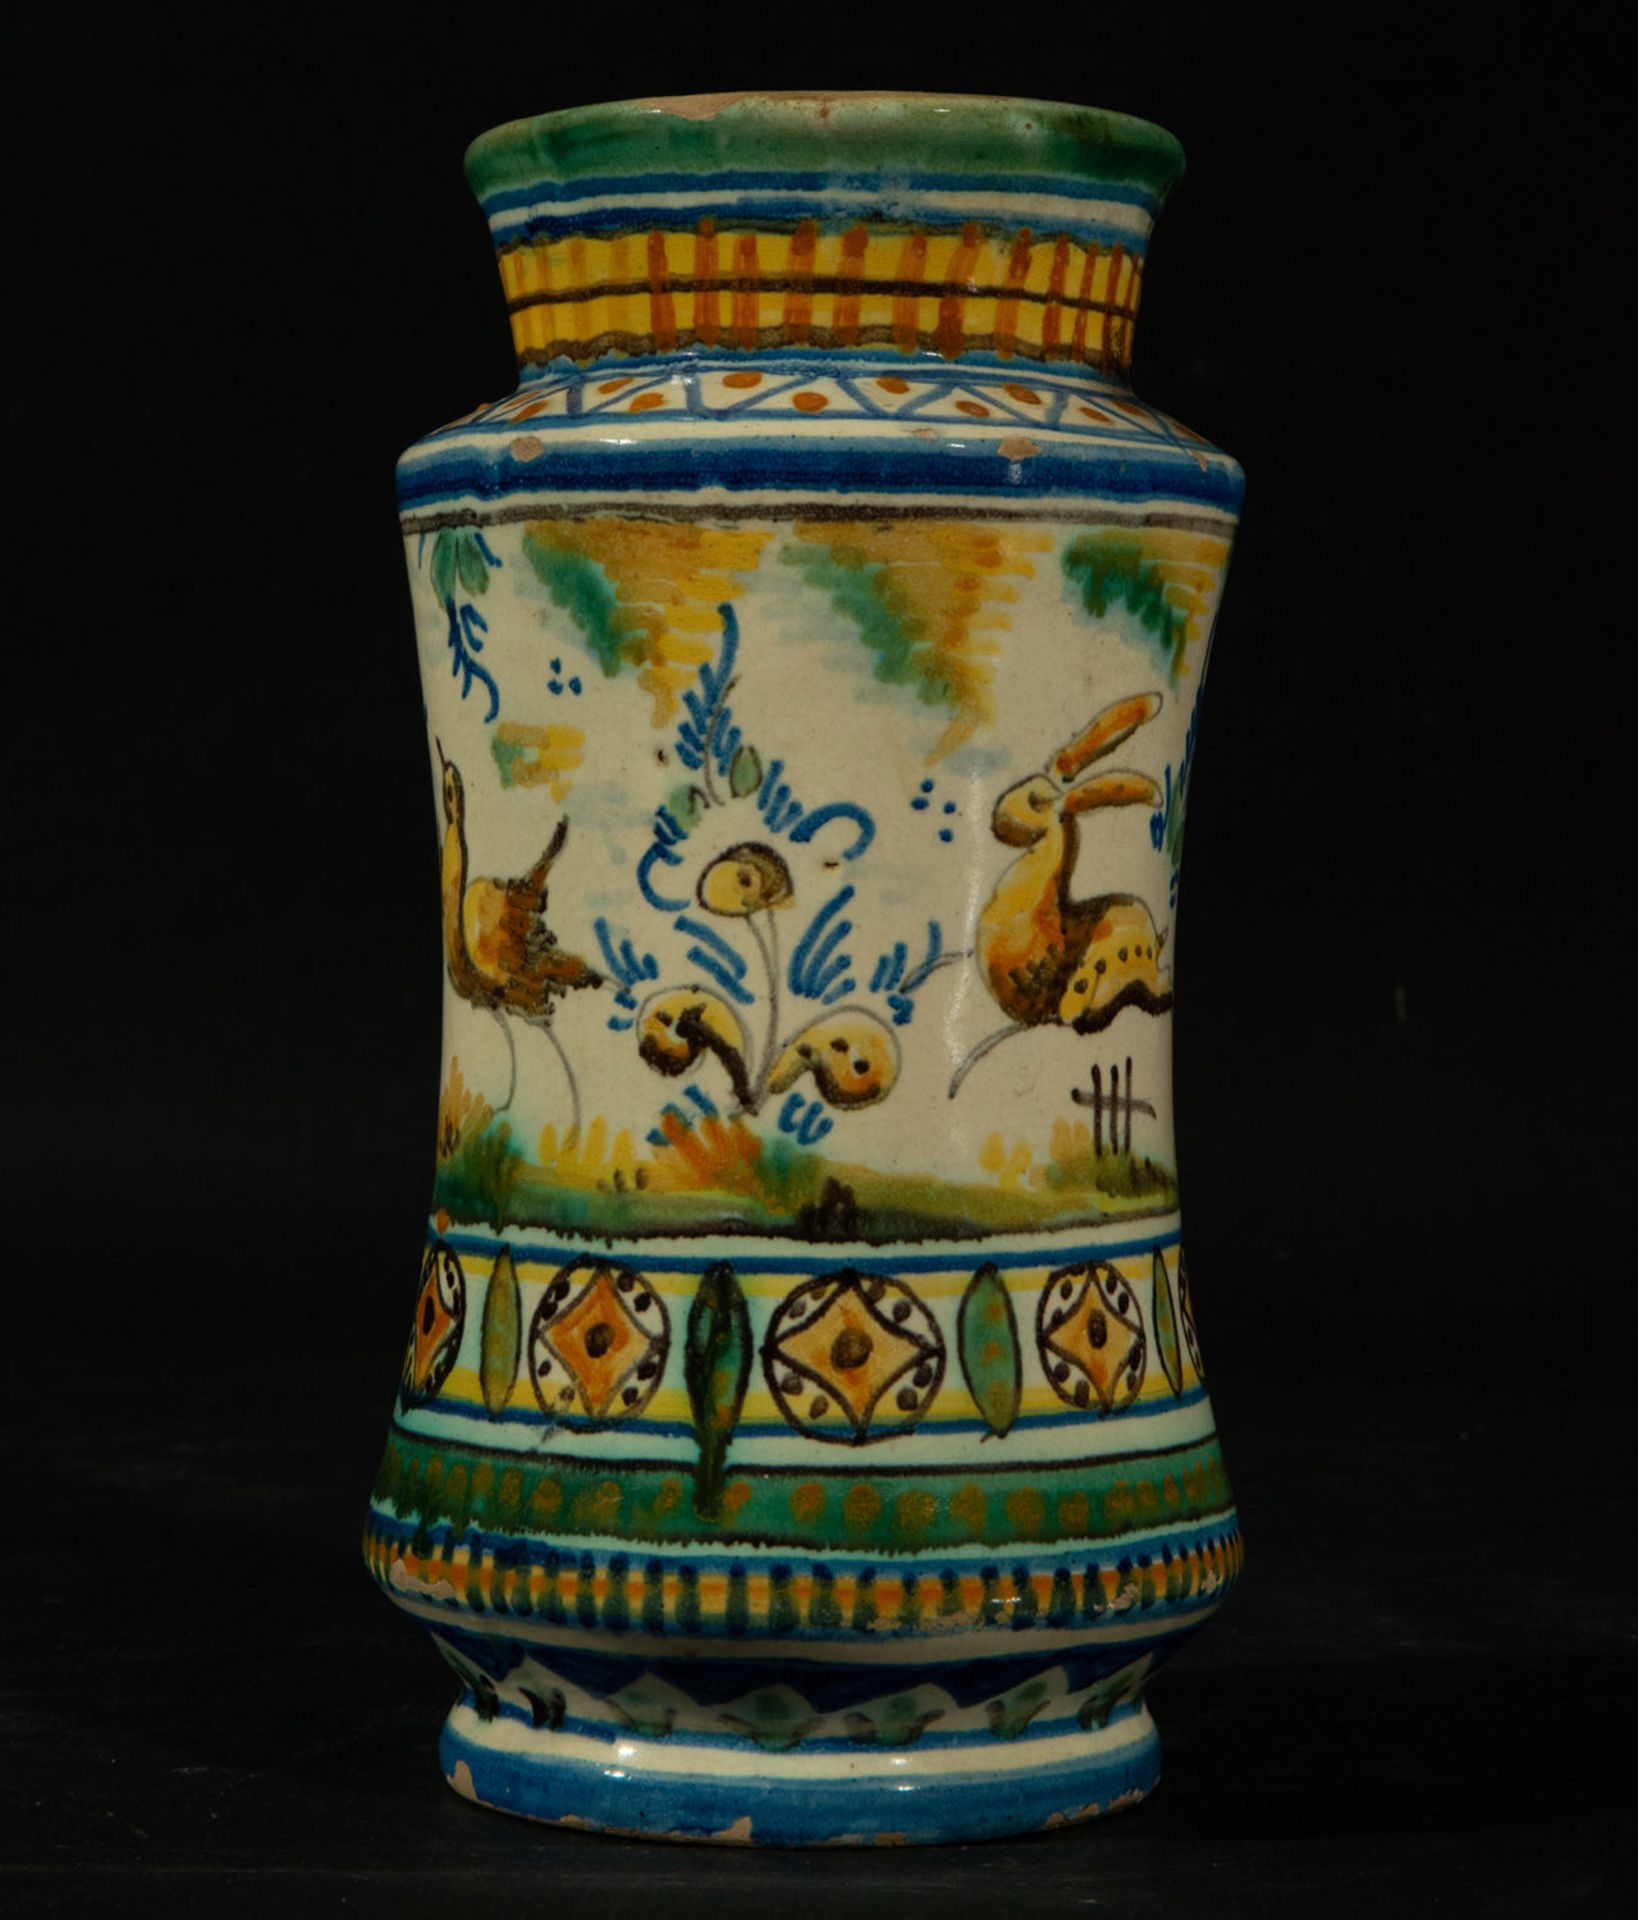 Ceramic Pharmacy Jar from Triana, Hare series, 18th - 19th century - Image 4 of 6